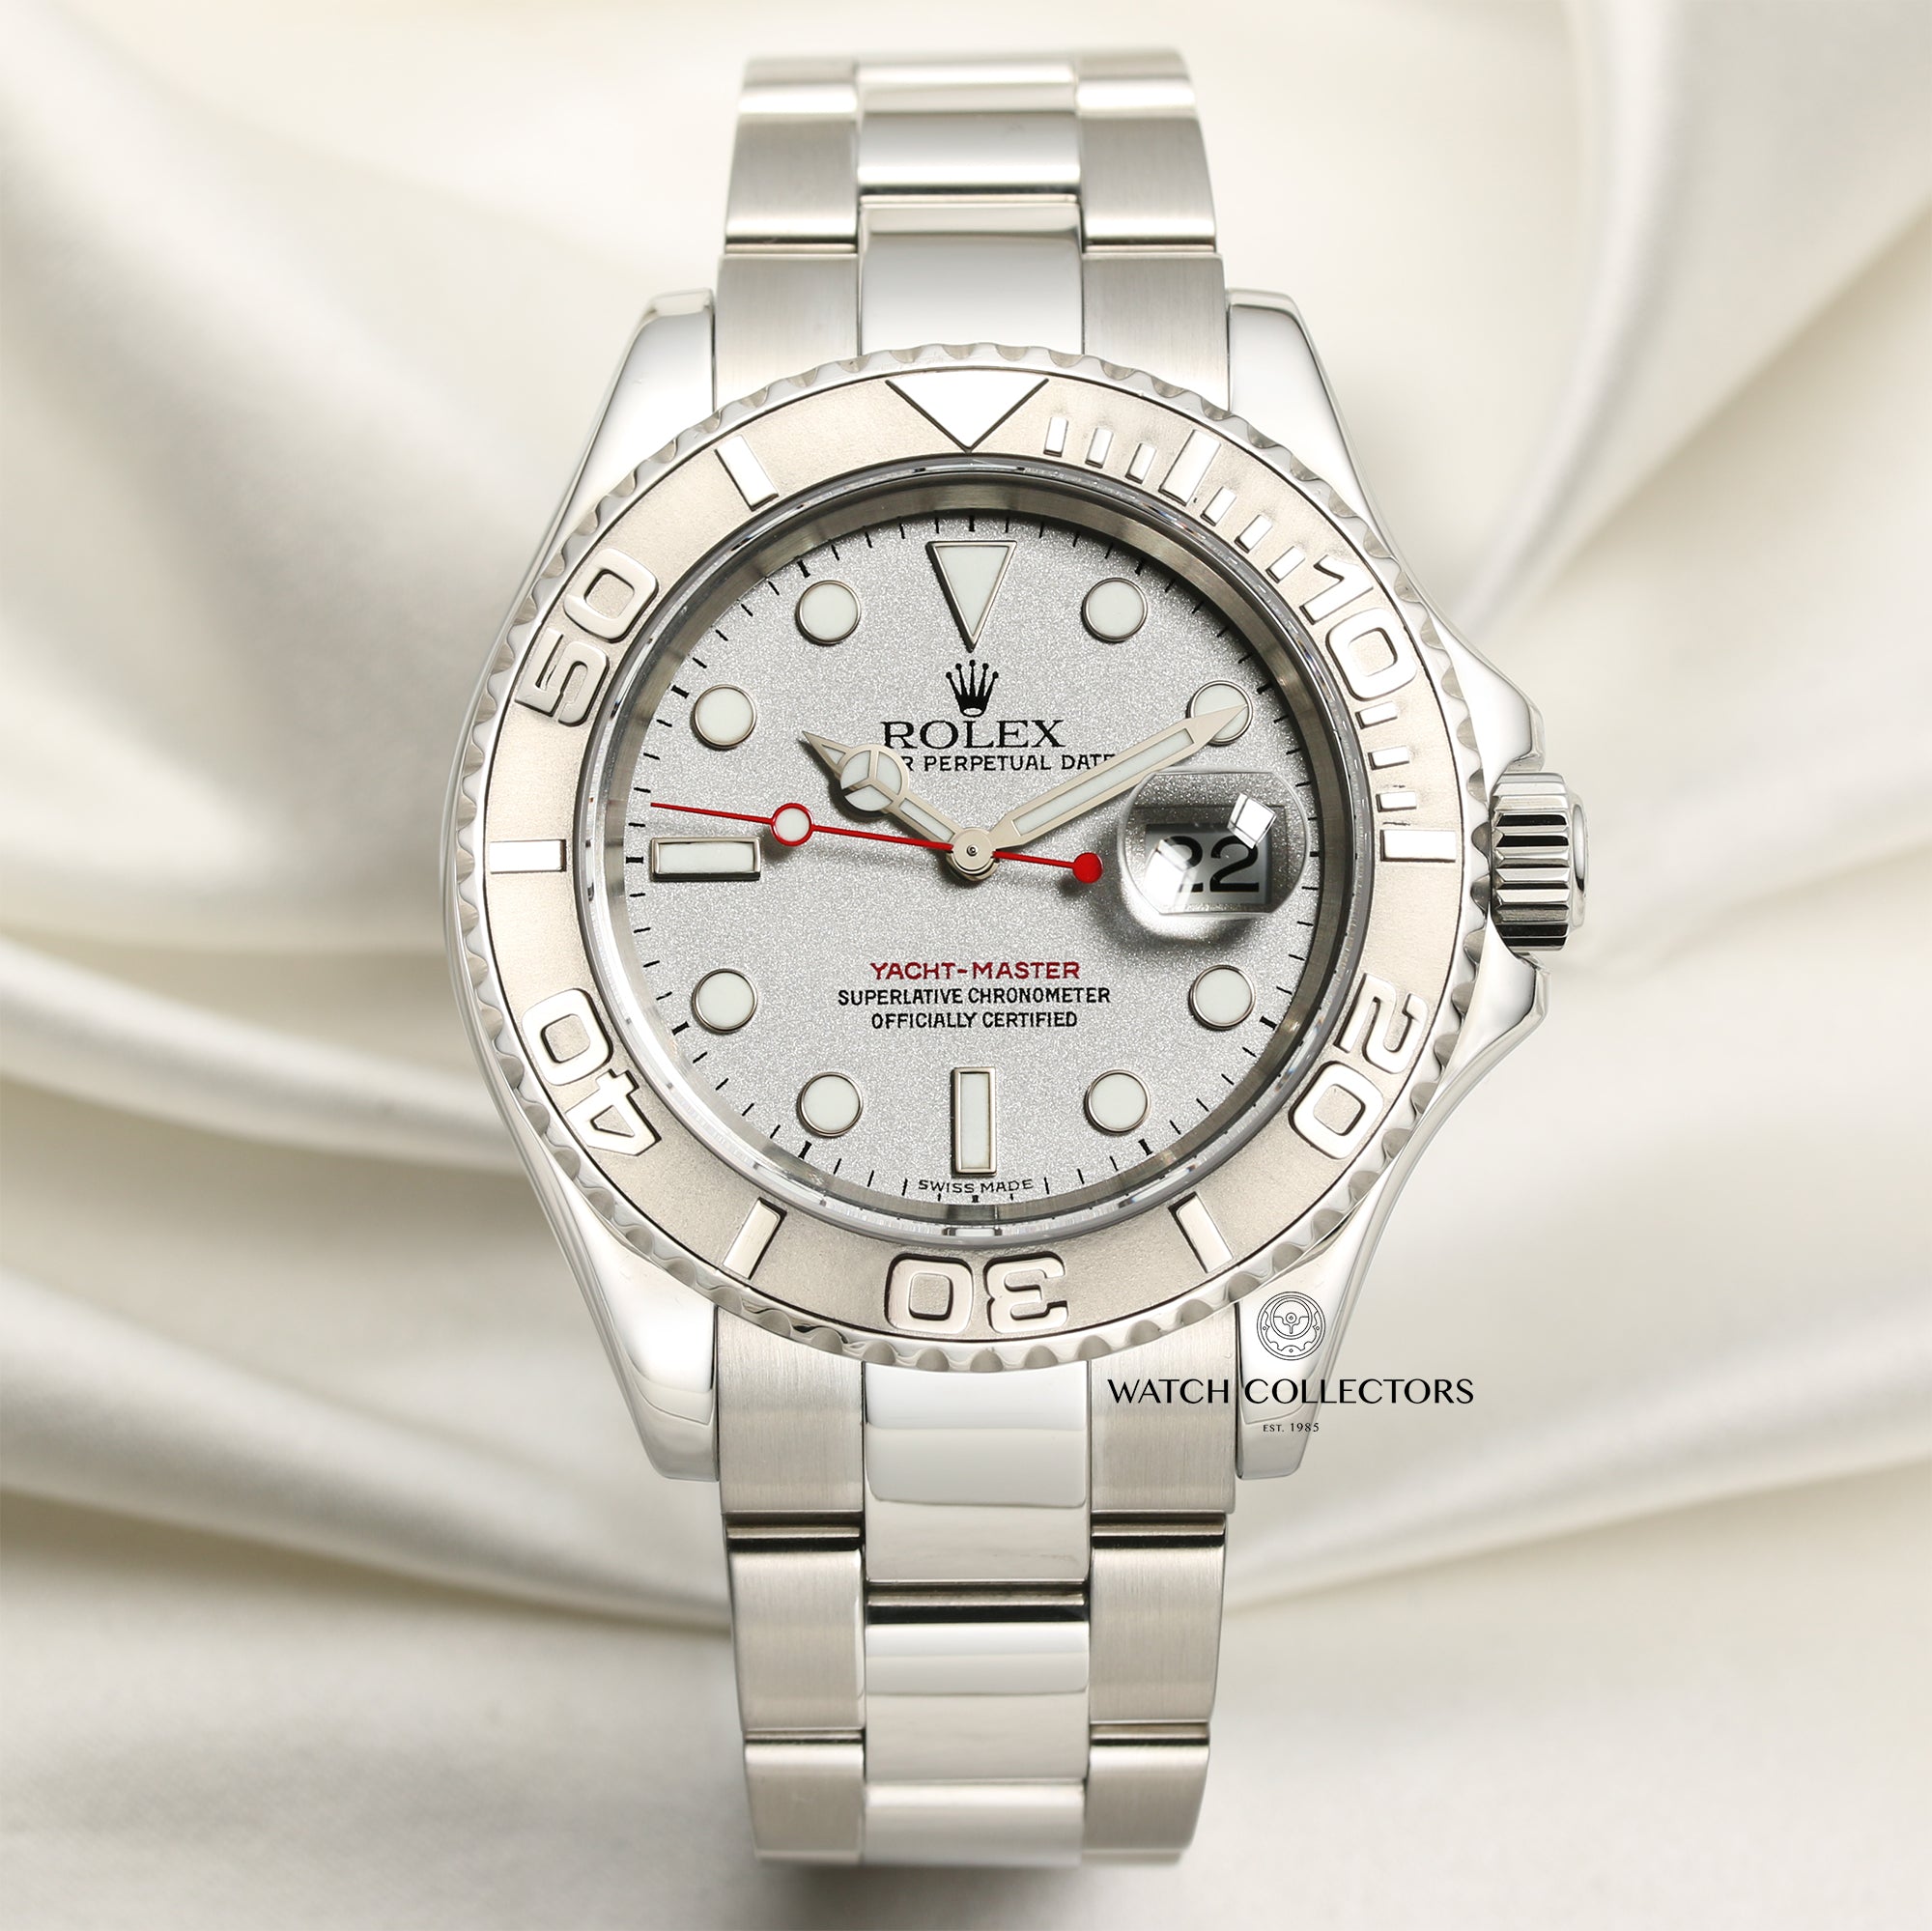 Rolex Yacht-Master 40mm 16622 Stainless Steel Watch Platinum Dial